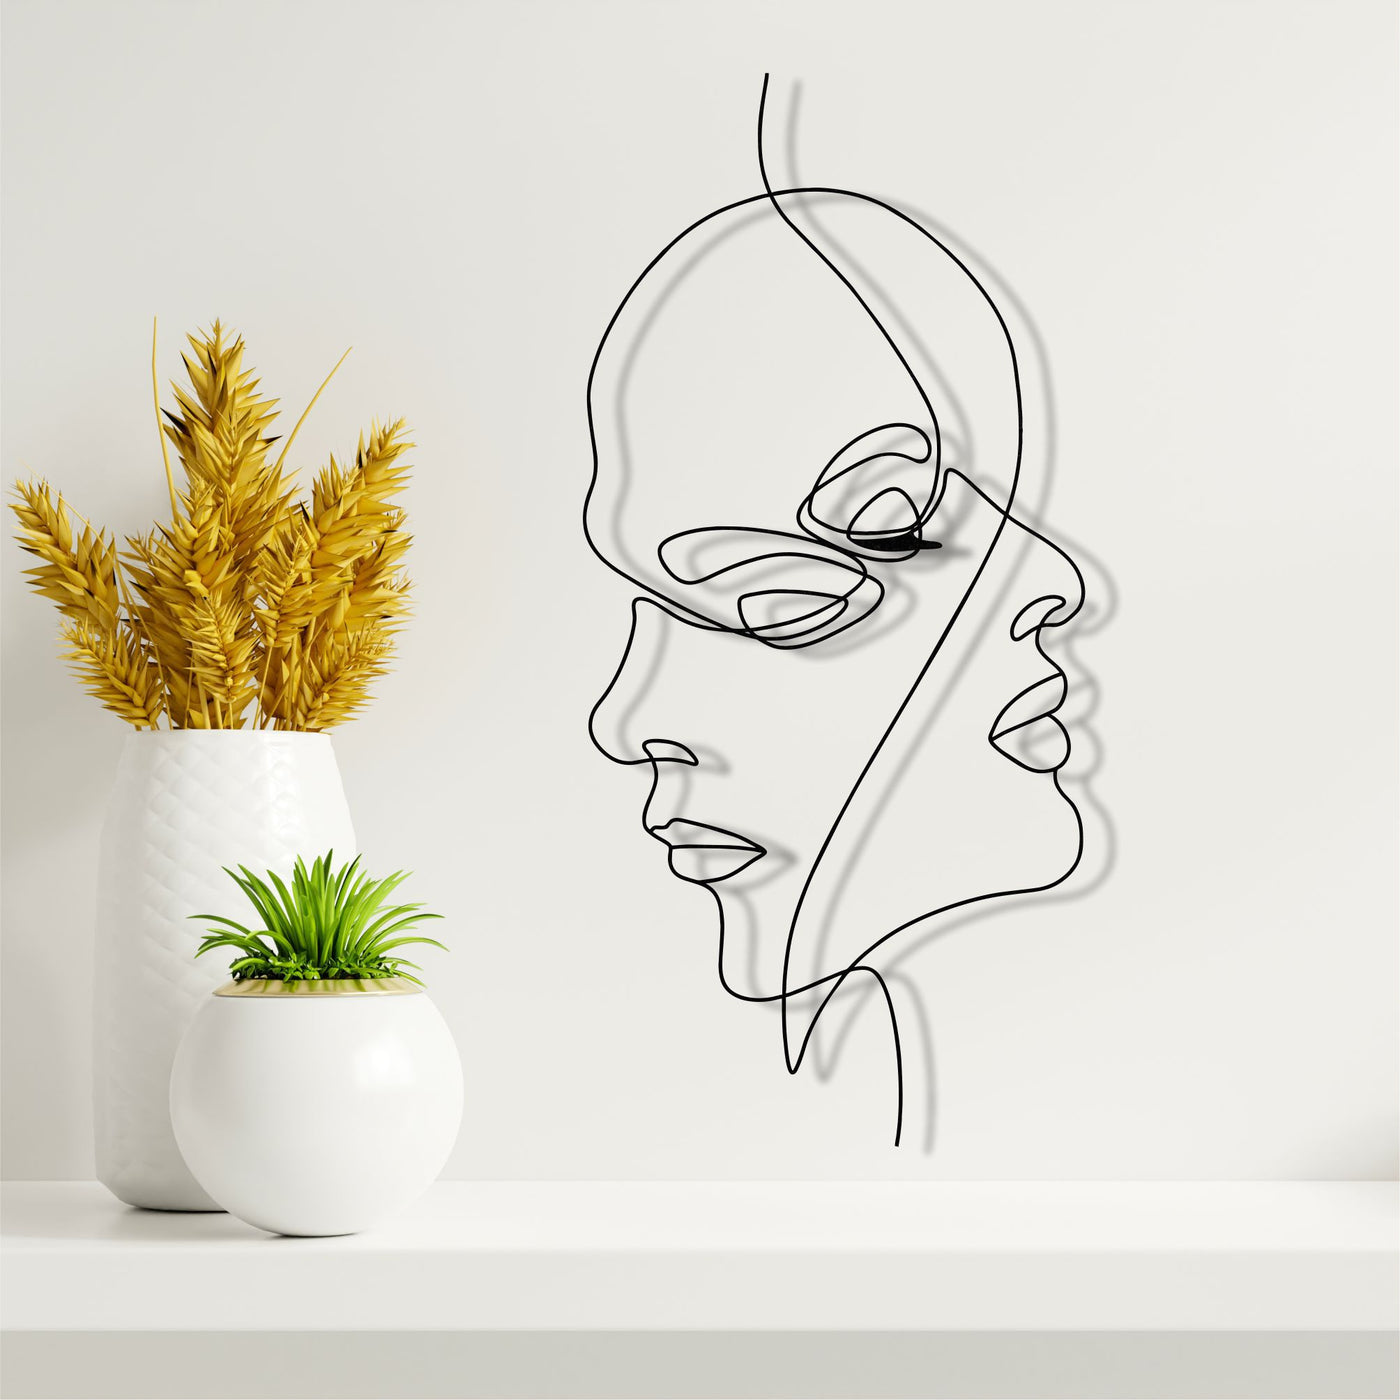 Woman and Man Face Abstract Metal Wall Art